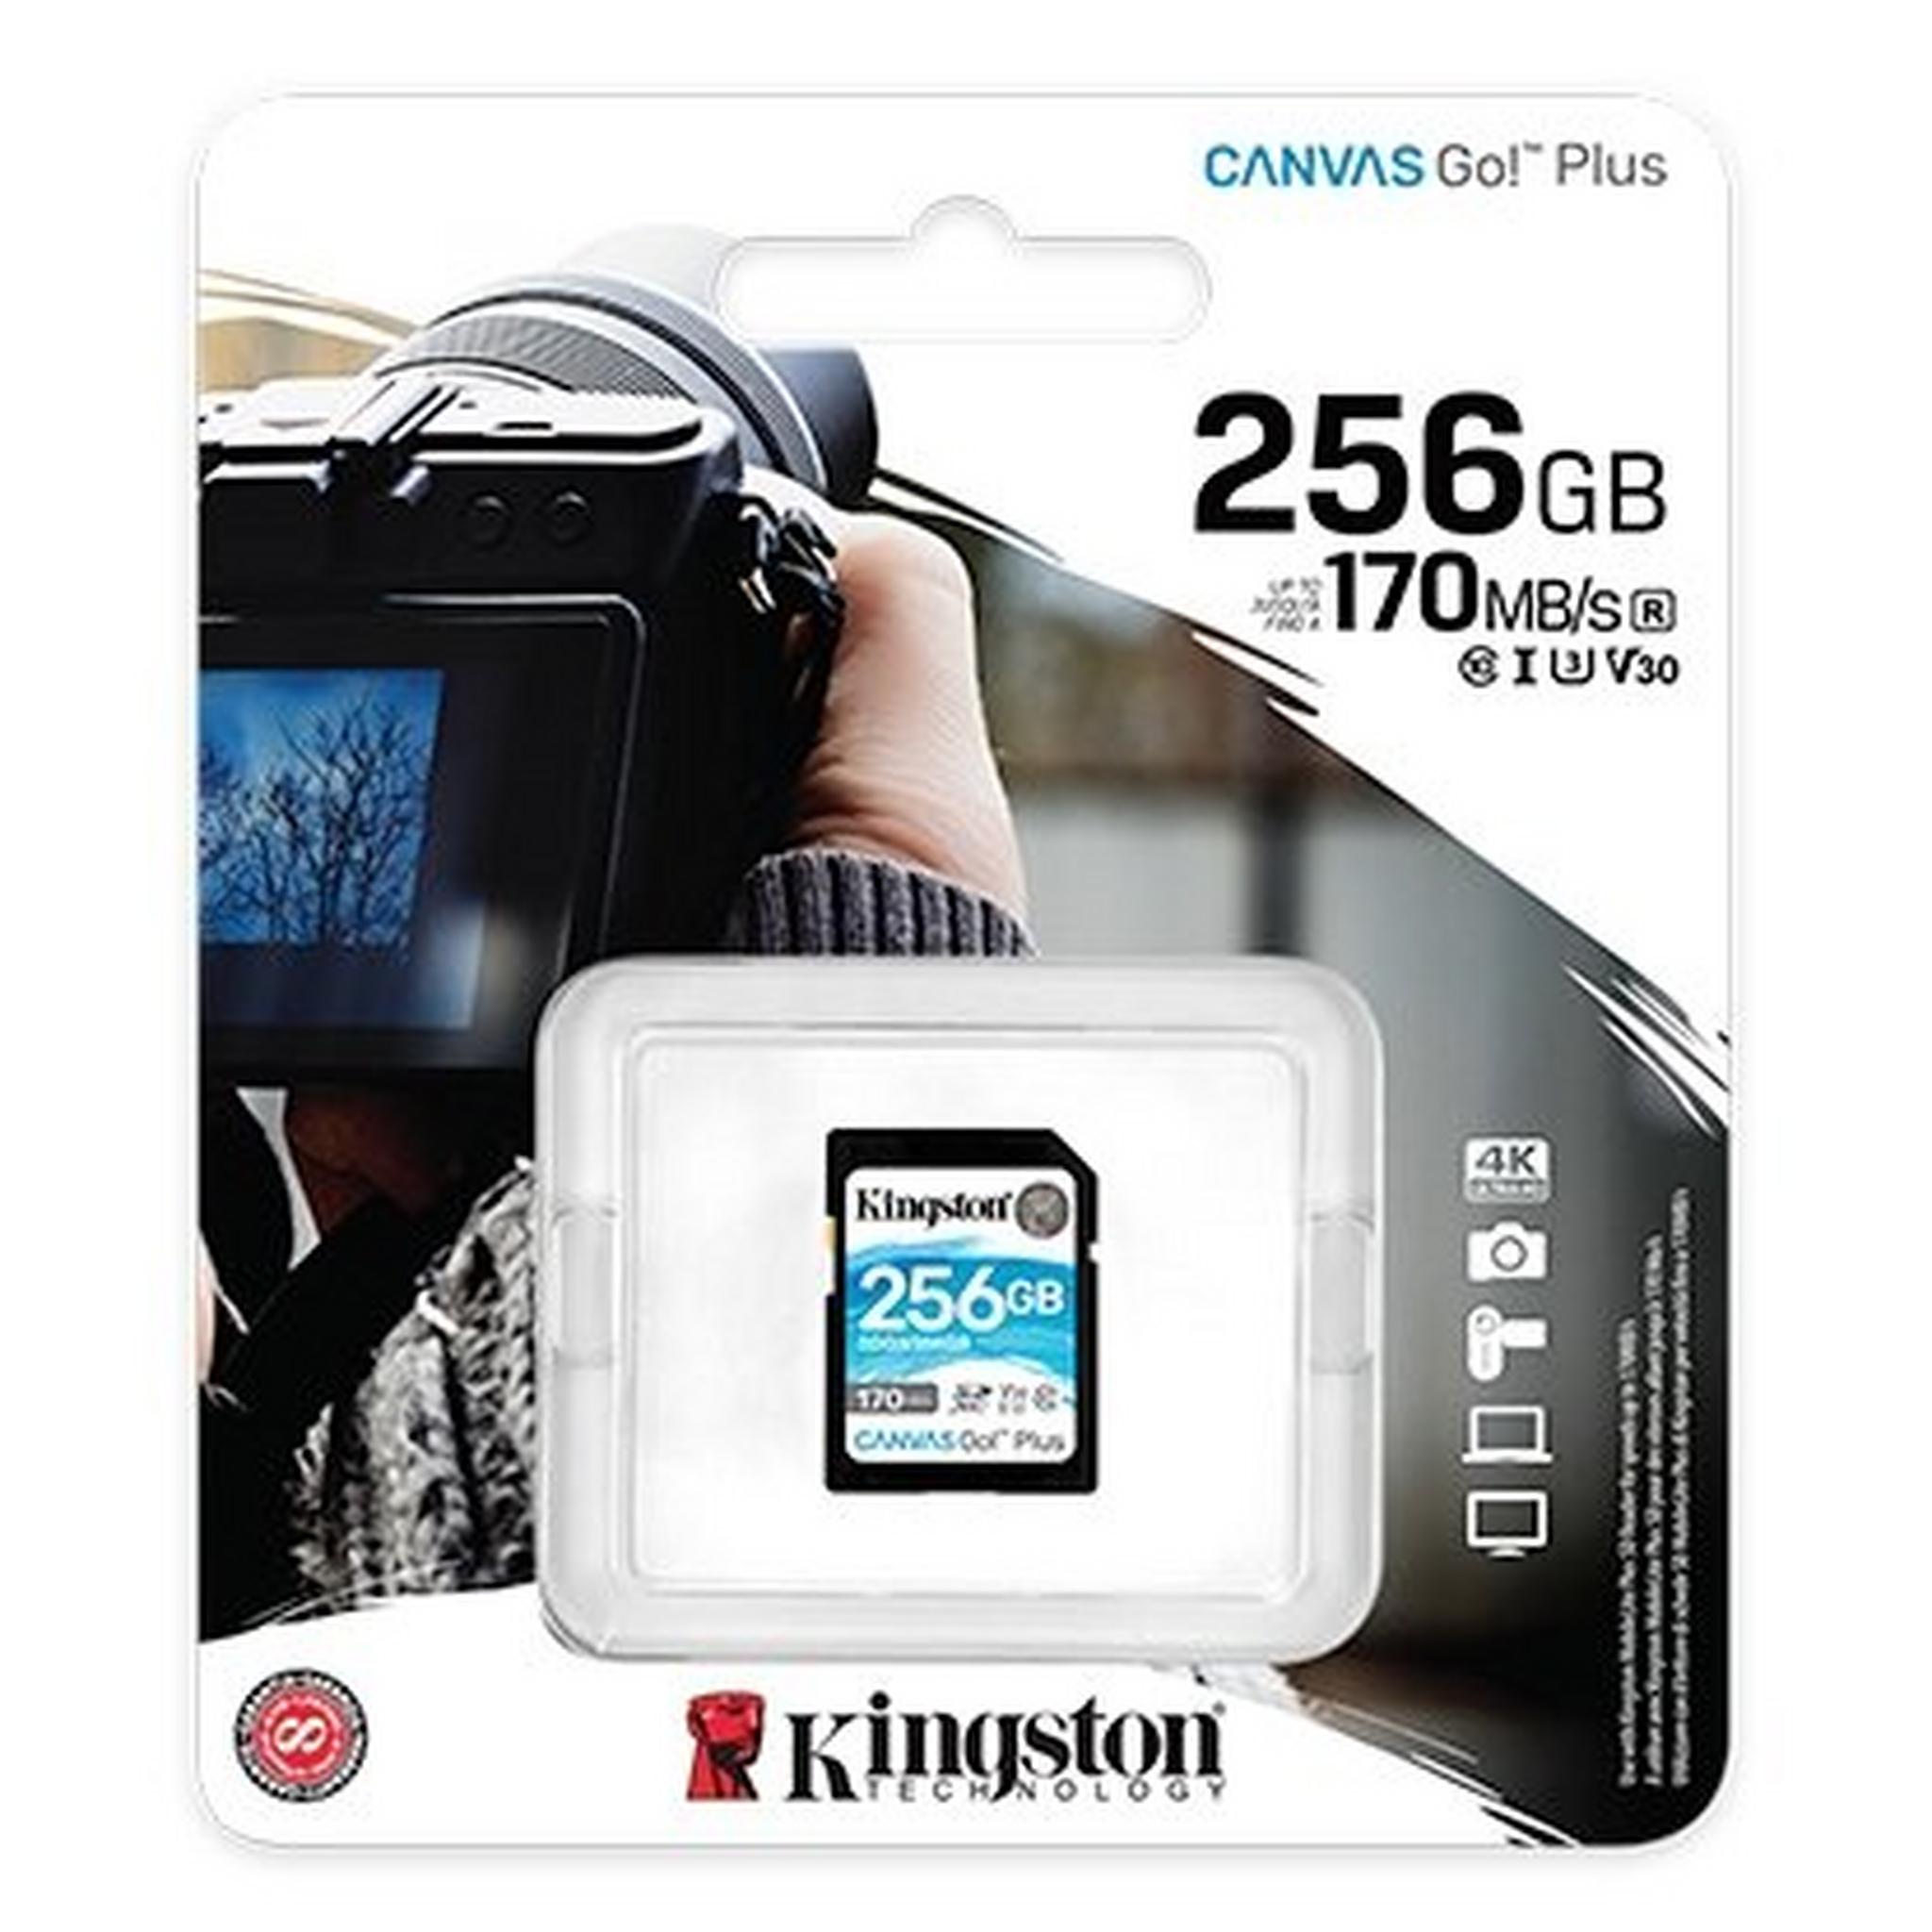 Kingston Go Memory Card 256GB SDXC CGP UHS-I Plus SD